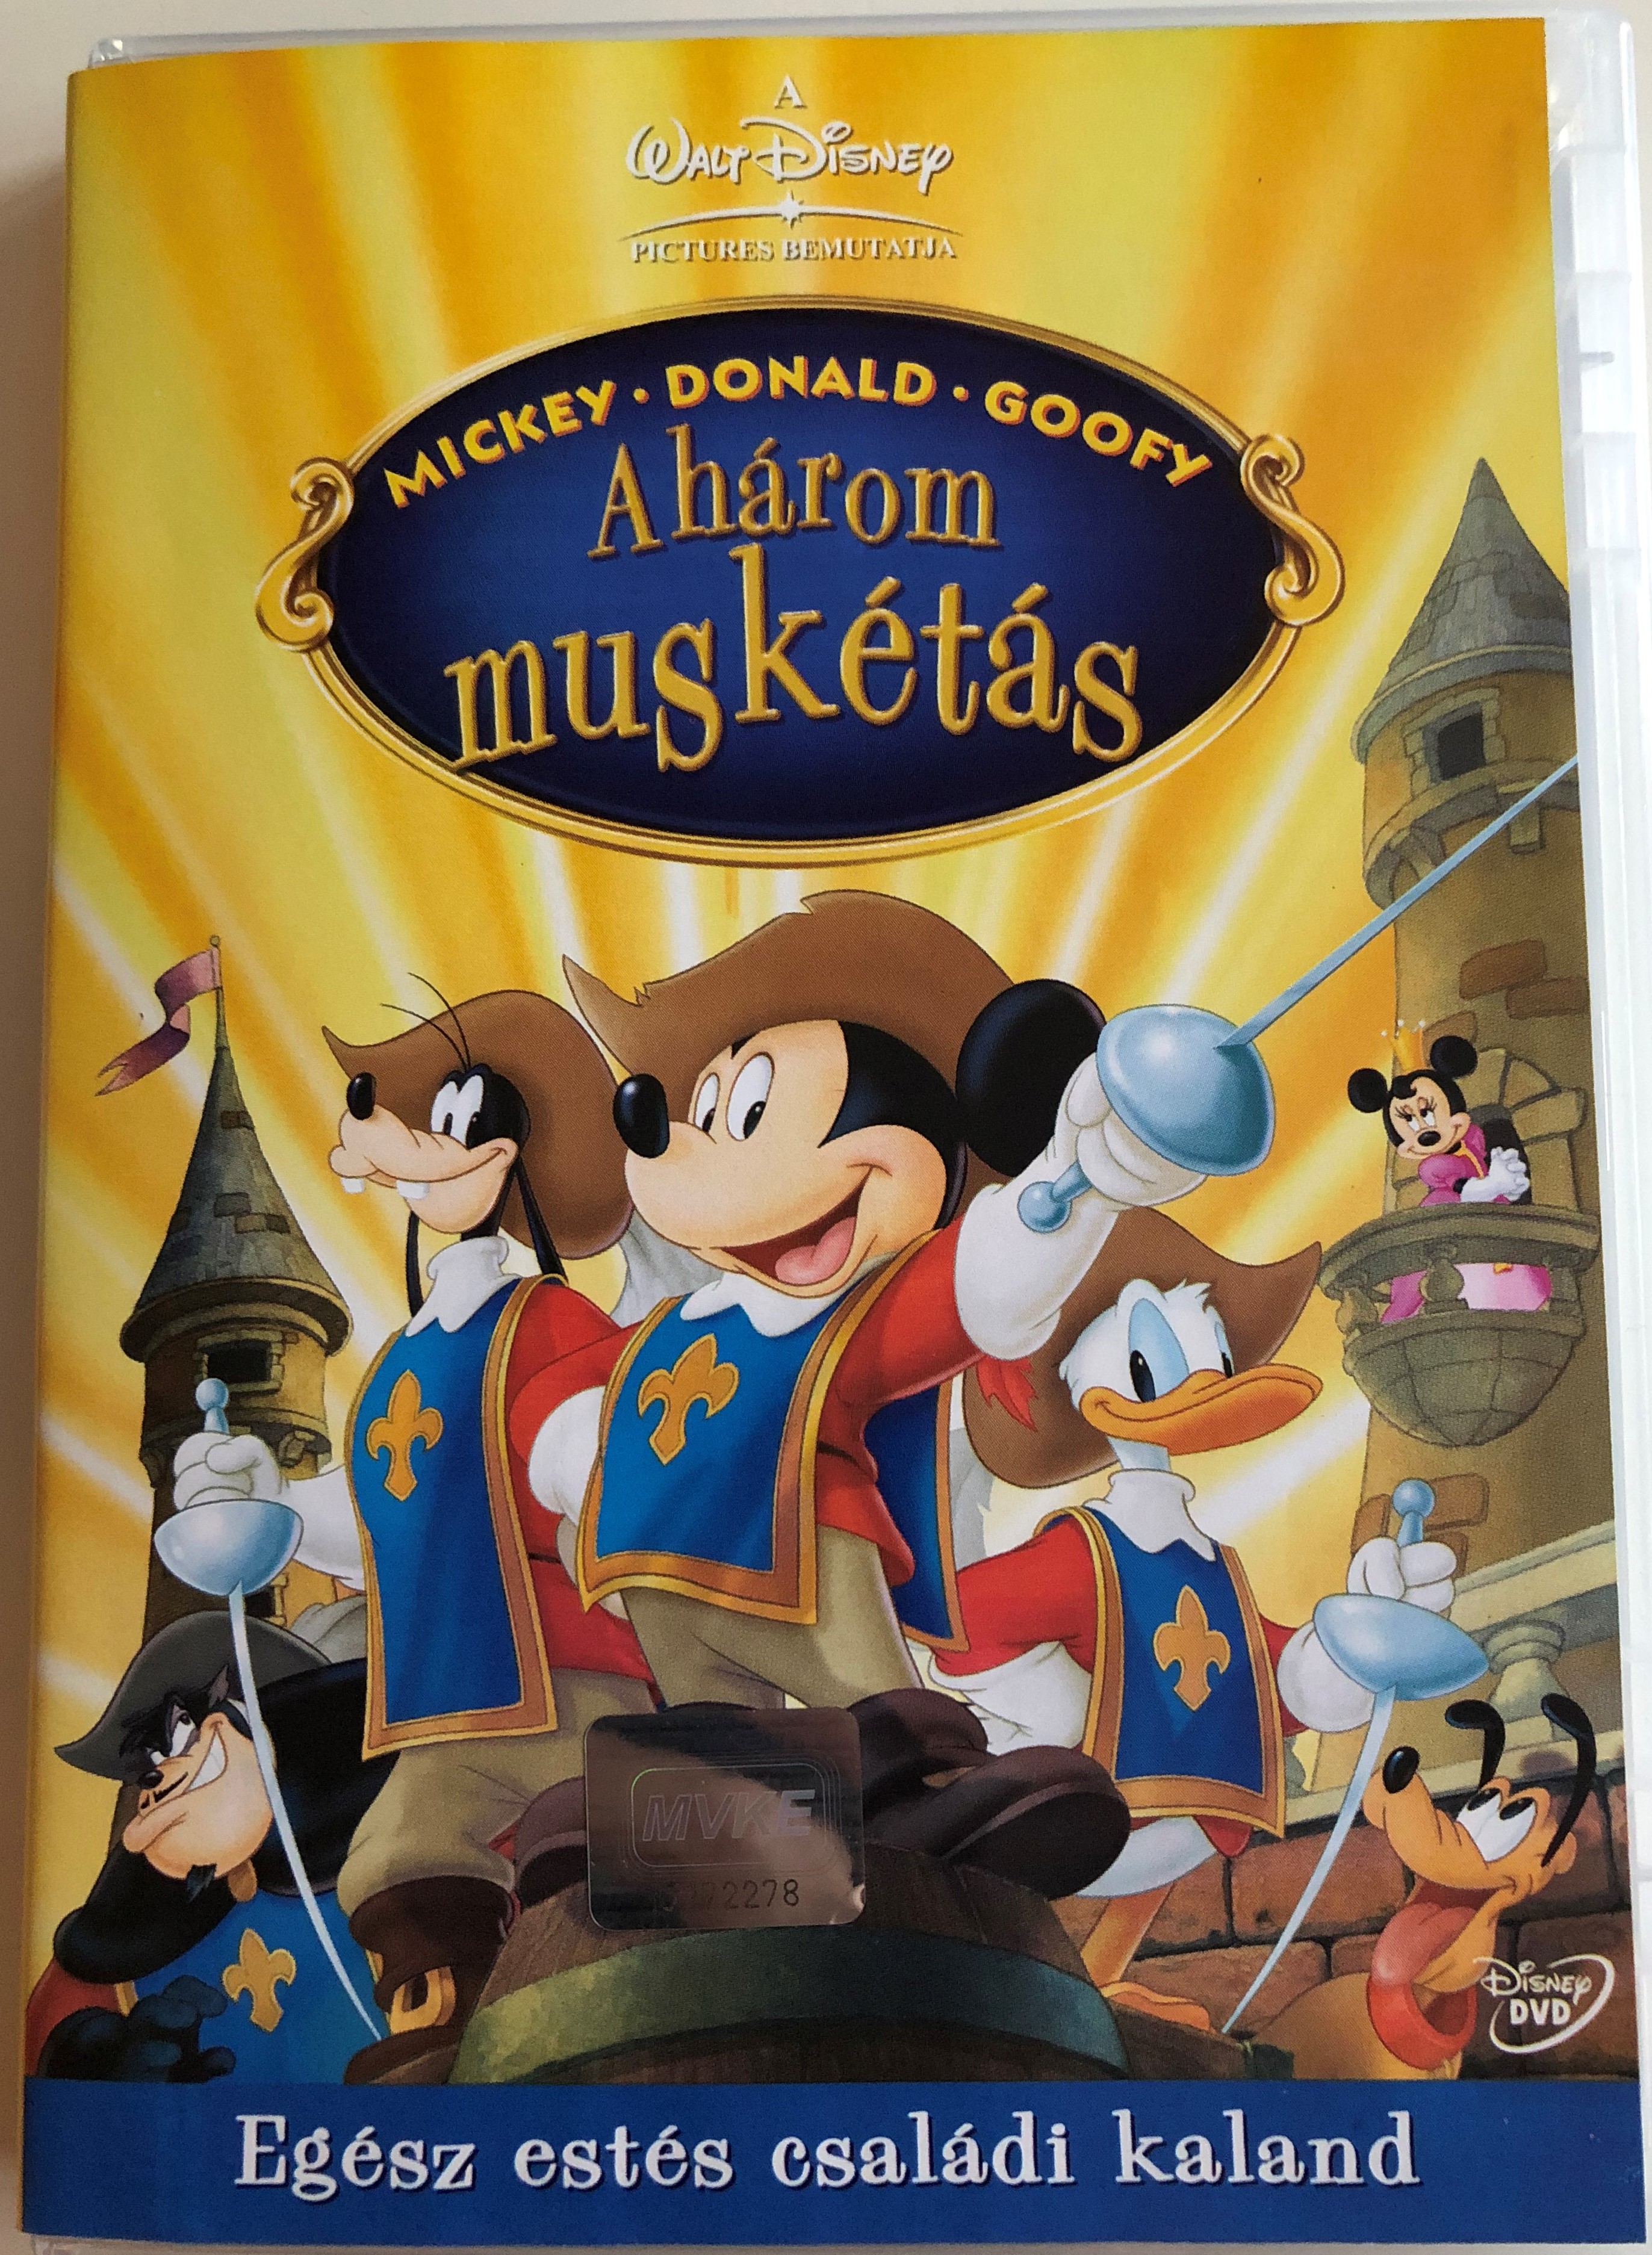 Mickey-Donald-Goofy: The Three Musketeers DVD 2004 1